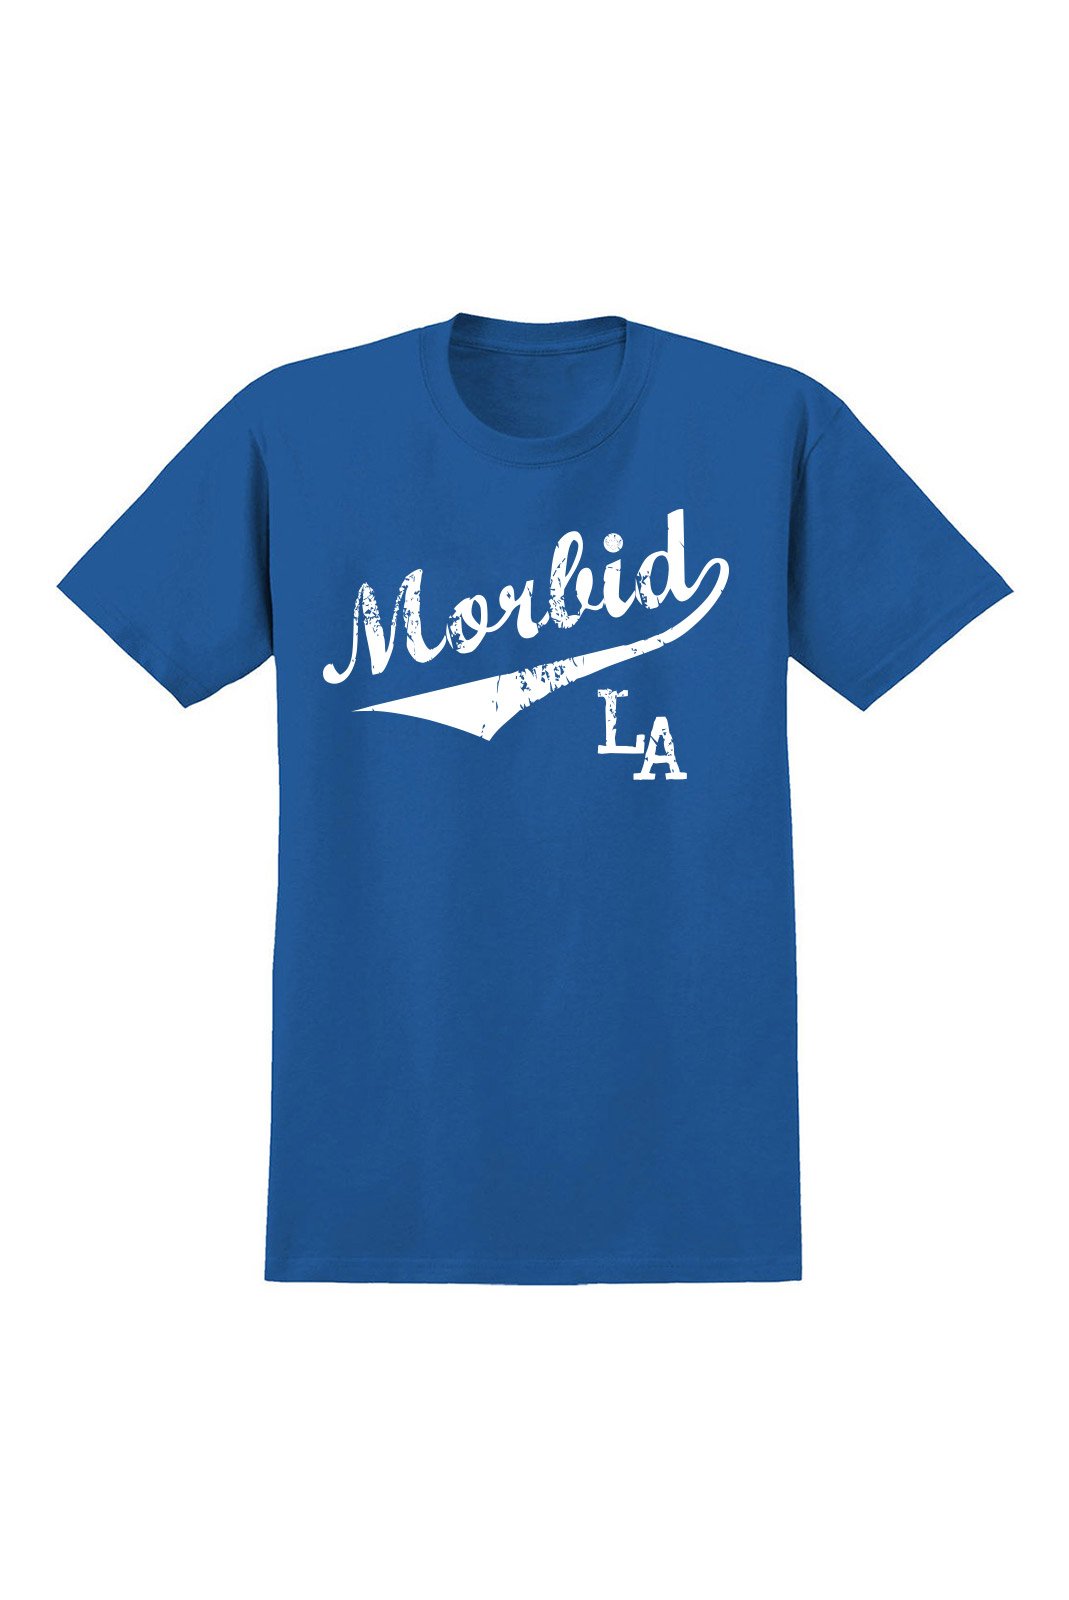 MORBID LA Streetwear Clothing Dodger Blue Sporty Fashion Style T-Shirt